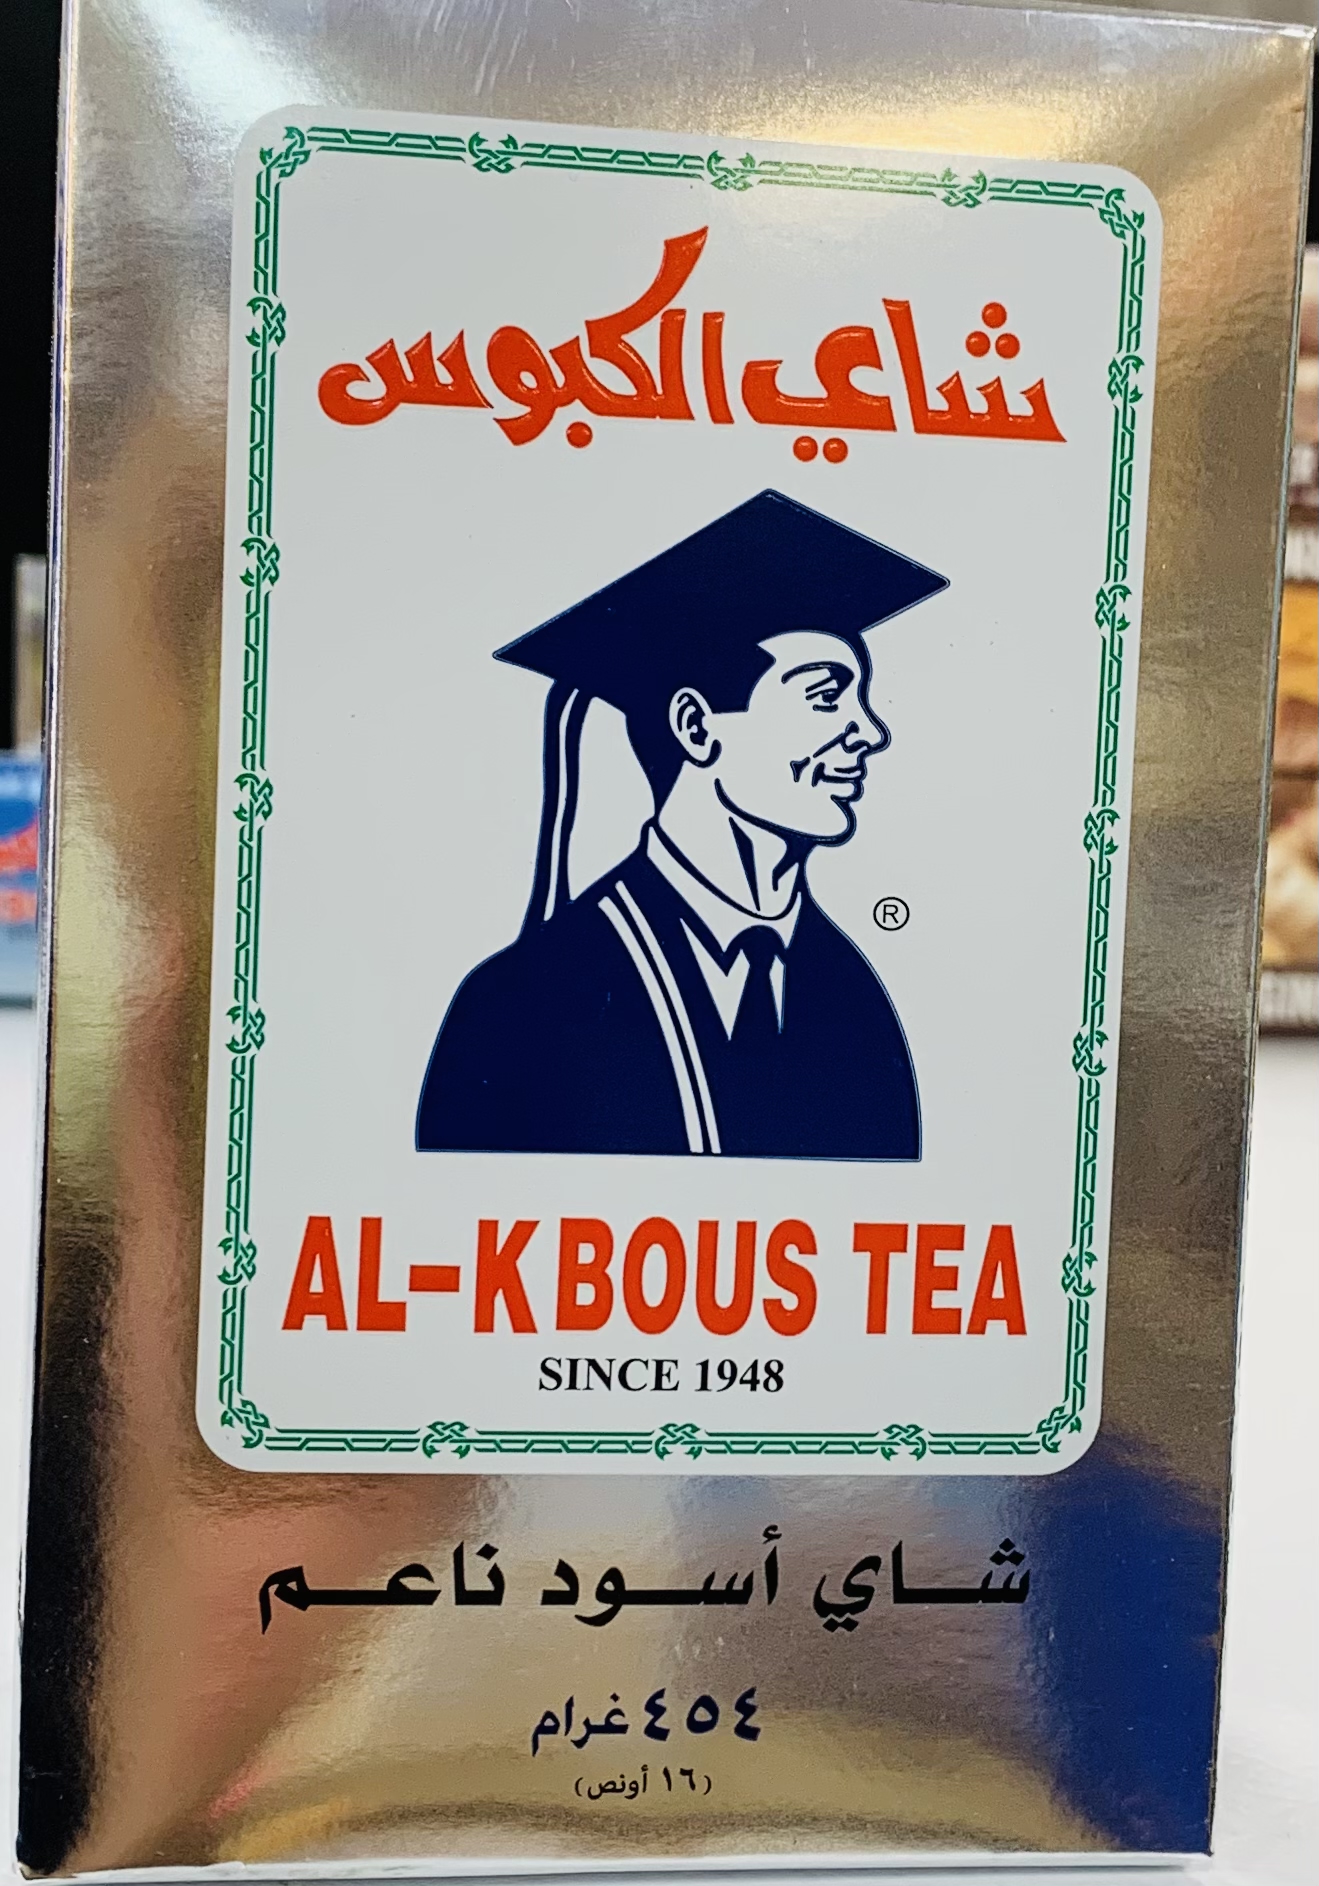 Al-kbous fine black tea 454g <br>6.95$